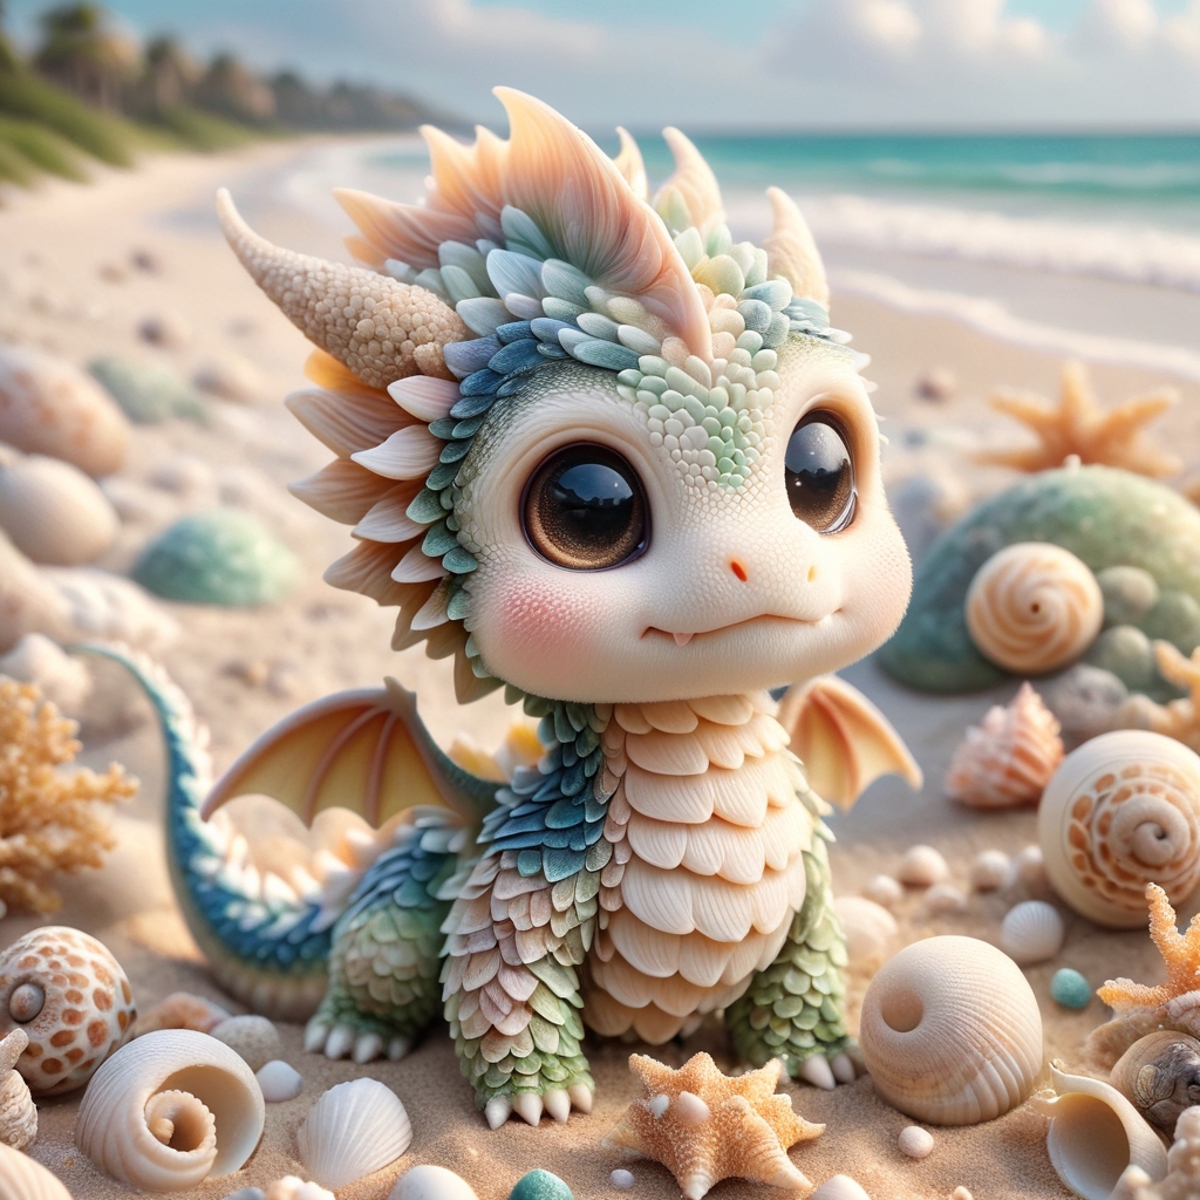 A cute dragon figurine on a sandy beach with seashells and a dragonfly.